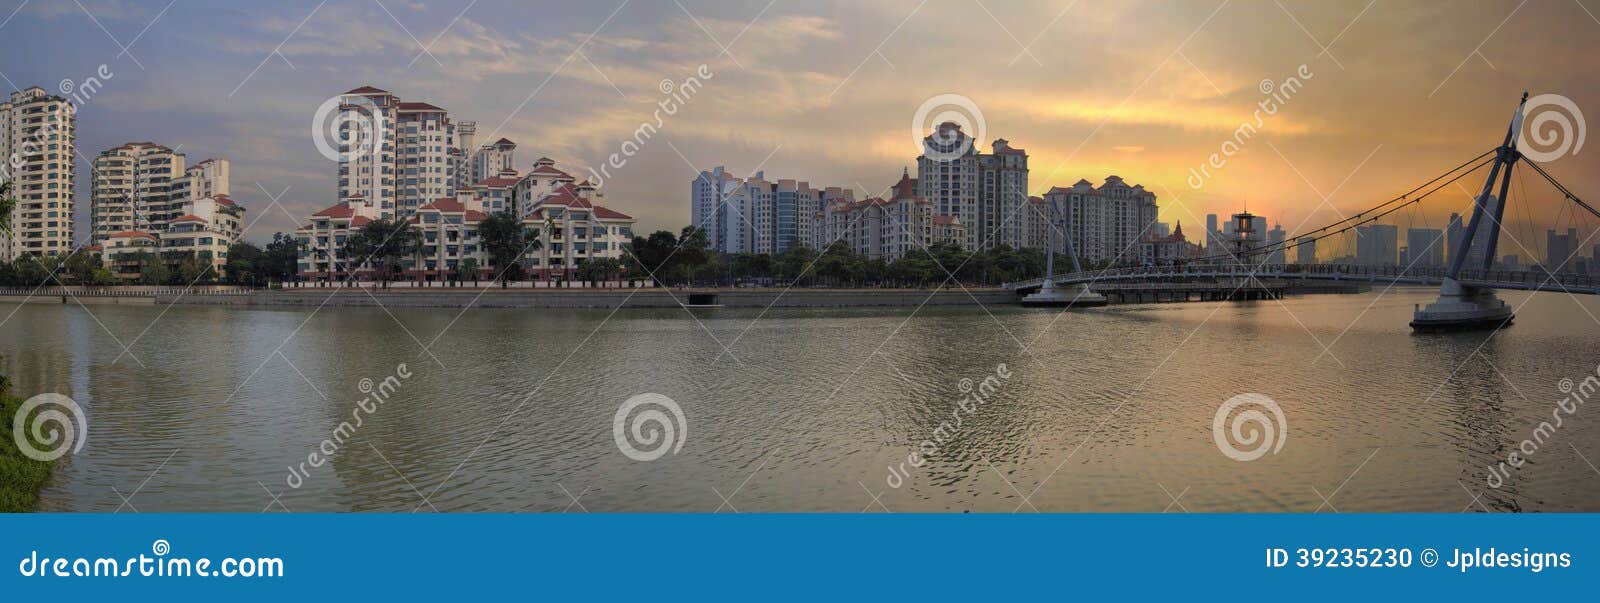 tanjong rhu residential district sunset